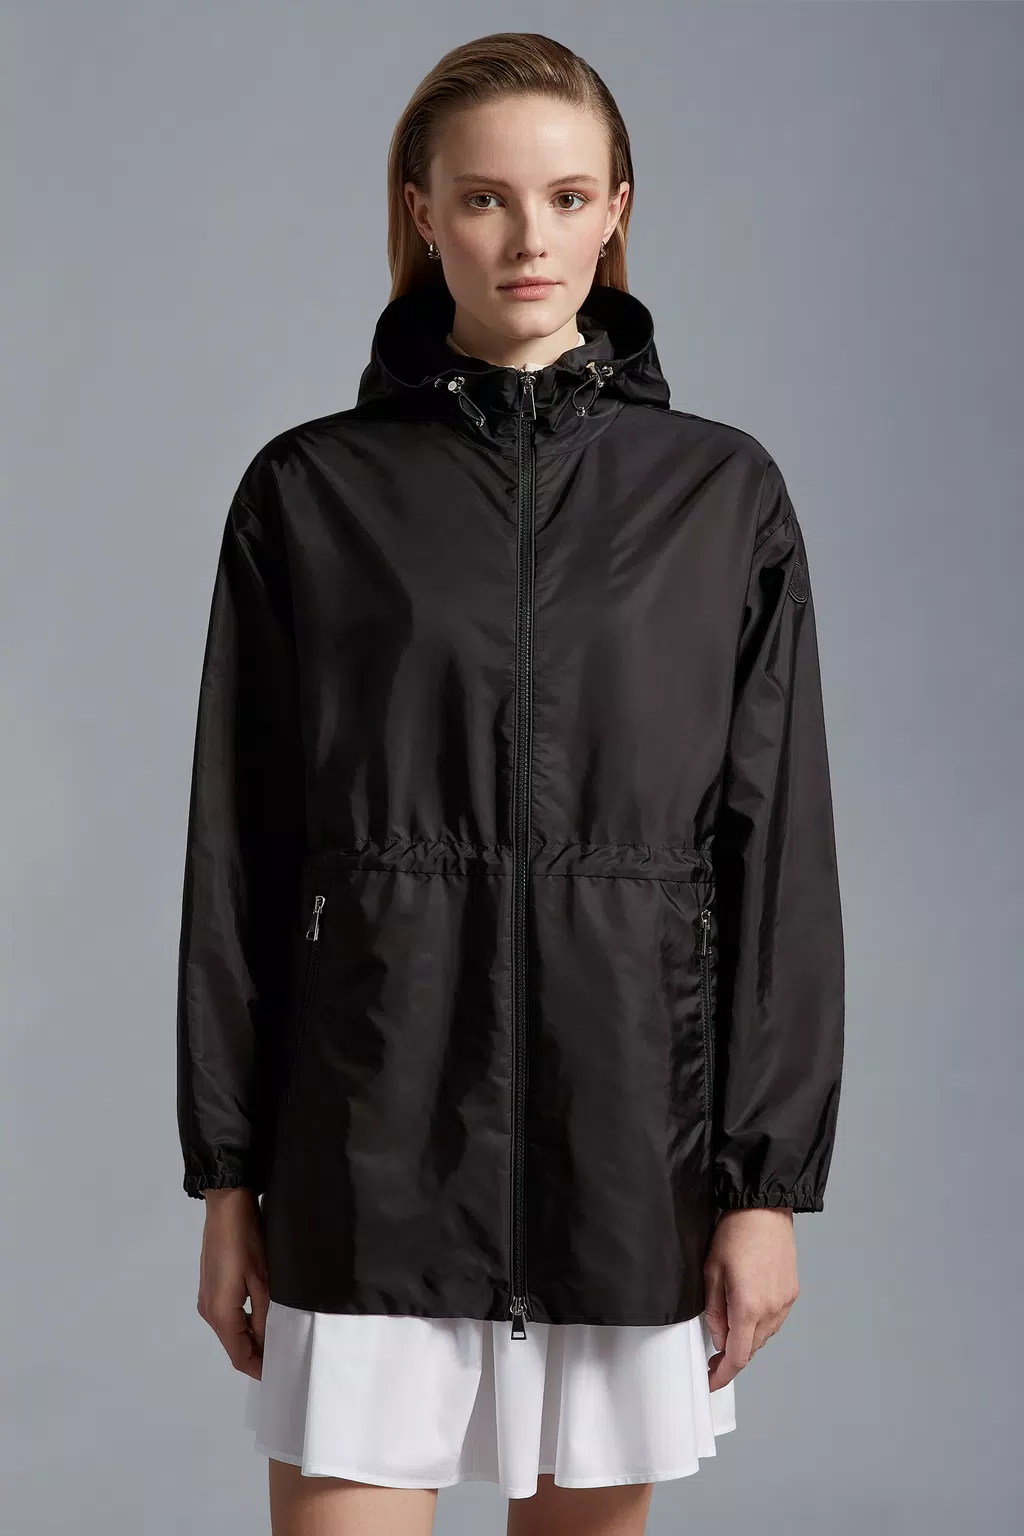 Wete Hooded Jacket Women Black Moncler 1